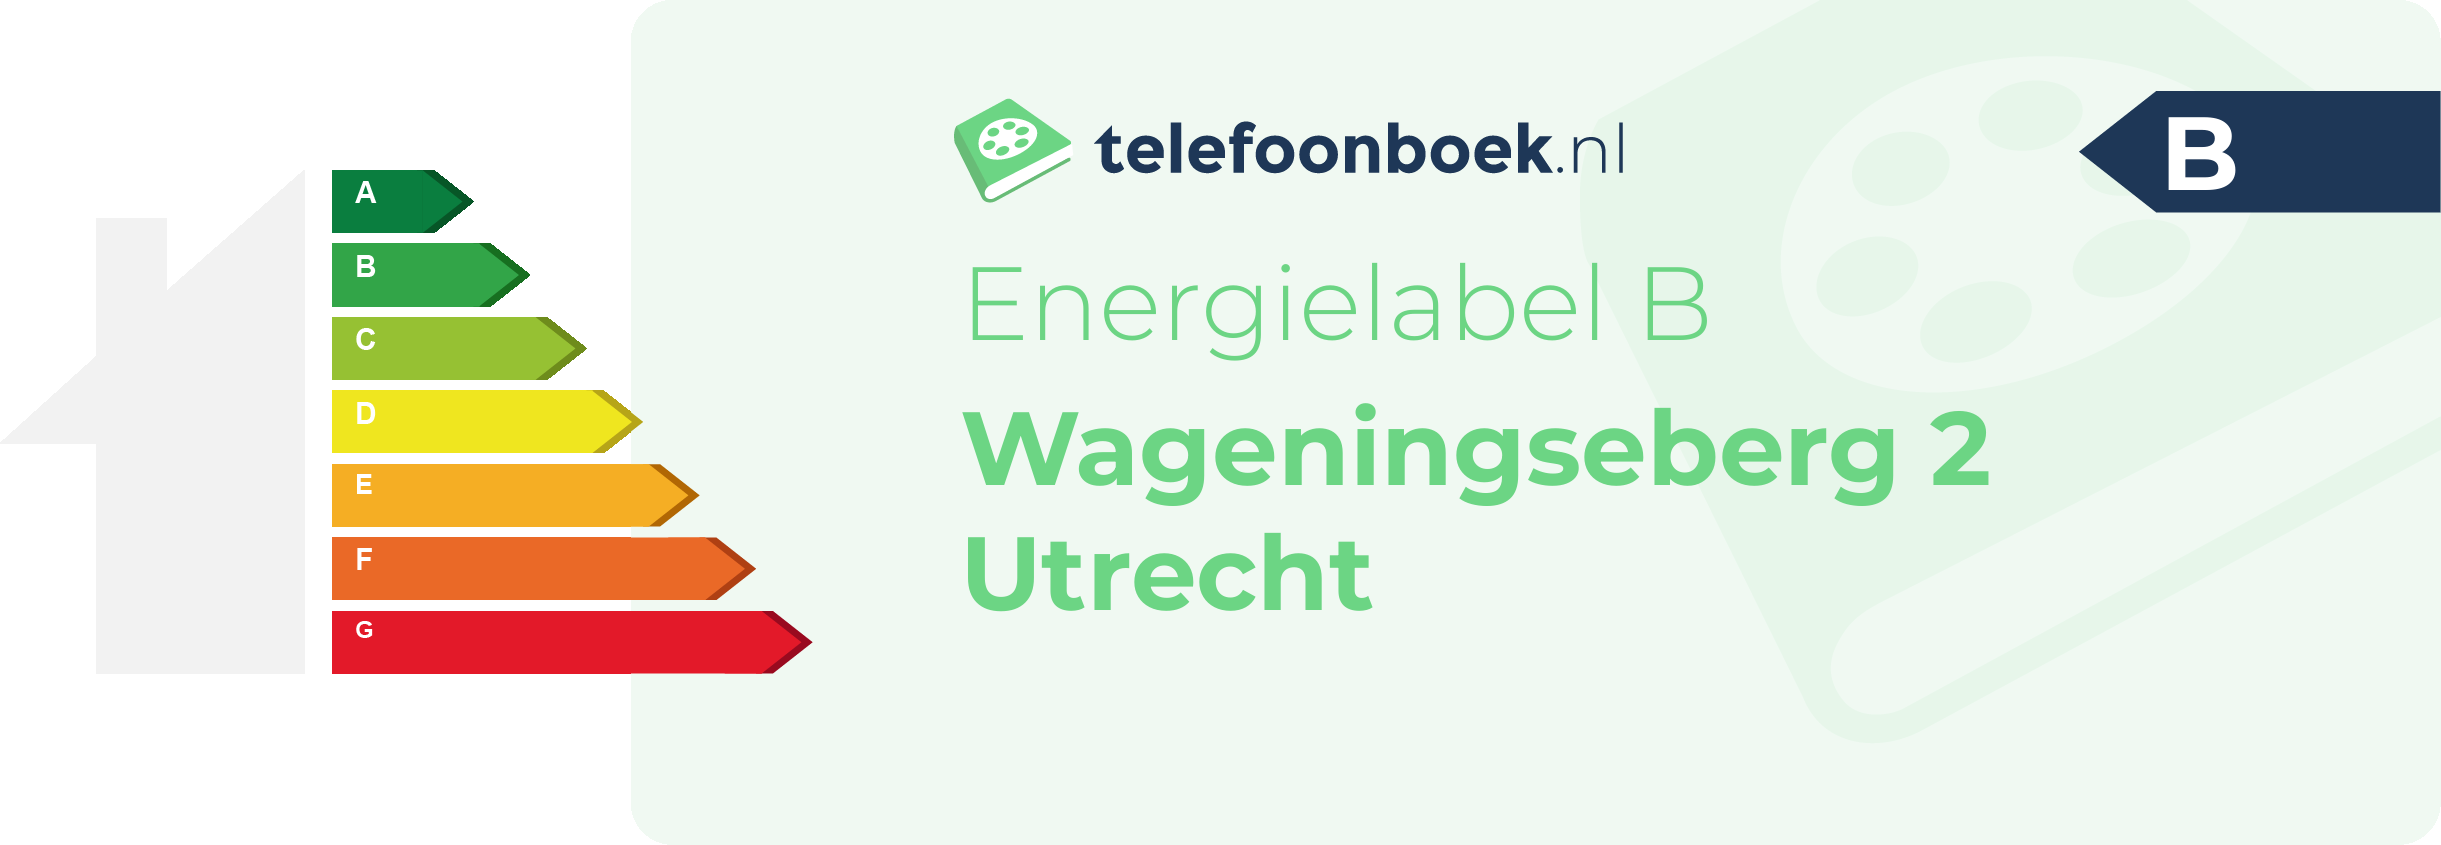 Energielabel Wageningseberg 2 Utrecht